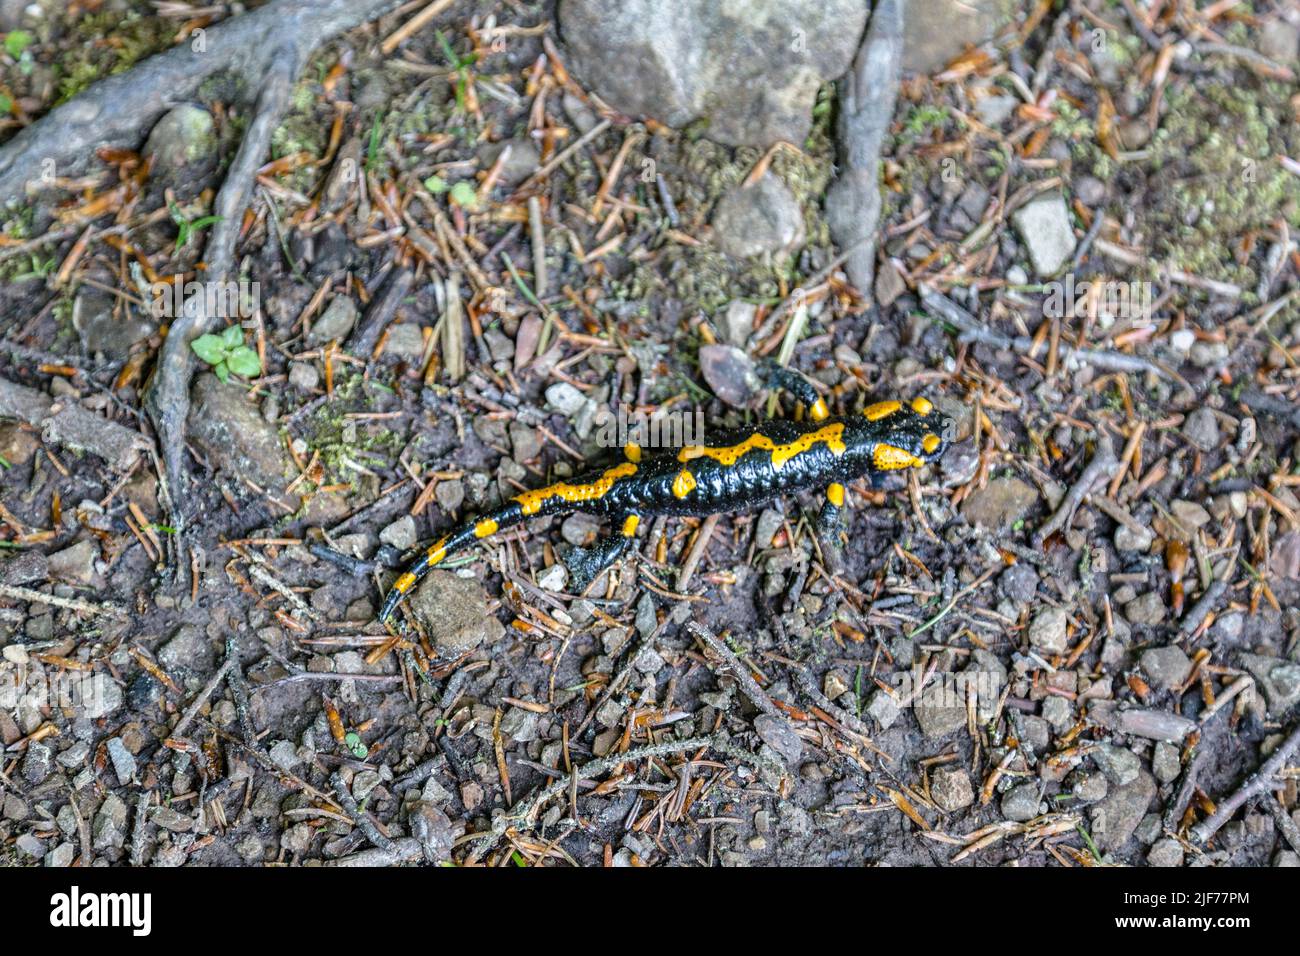 Fire salamander (Salamandra salamandra) - black amphibia with yellow spots or stripes to a varying degree Stock Photo